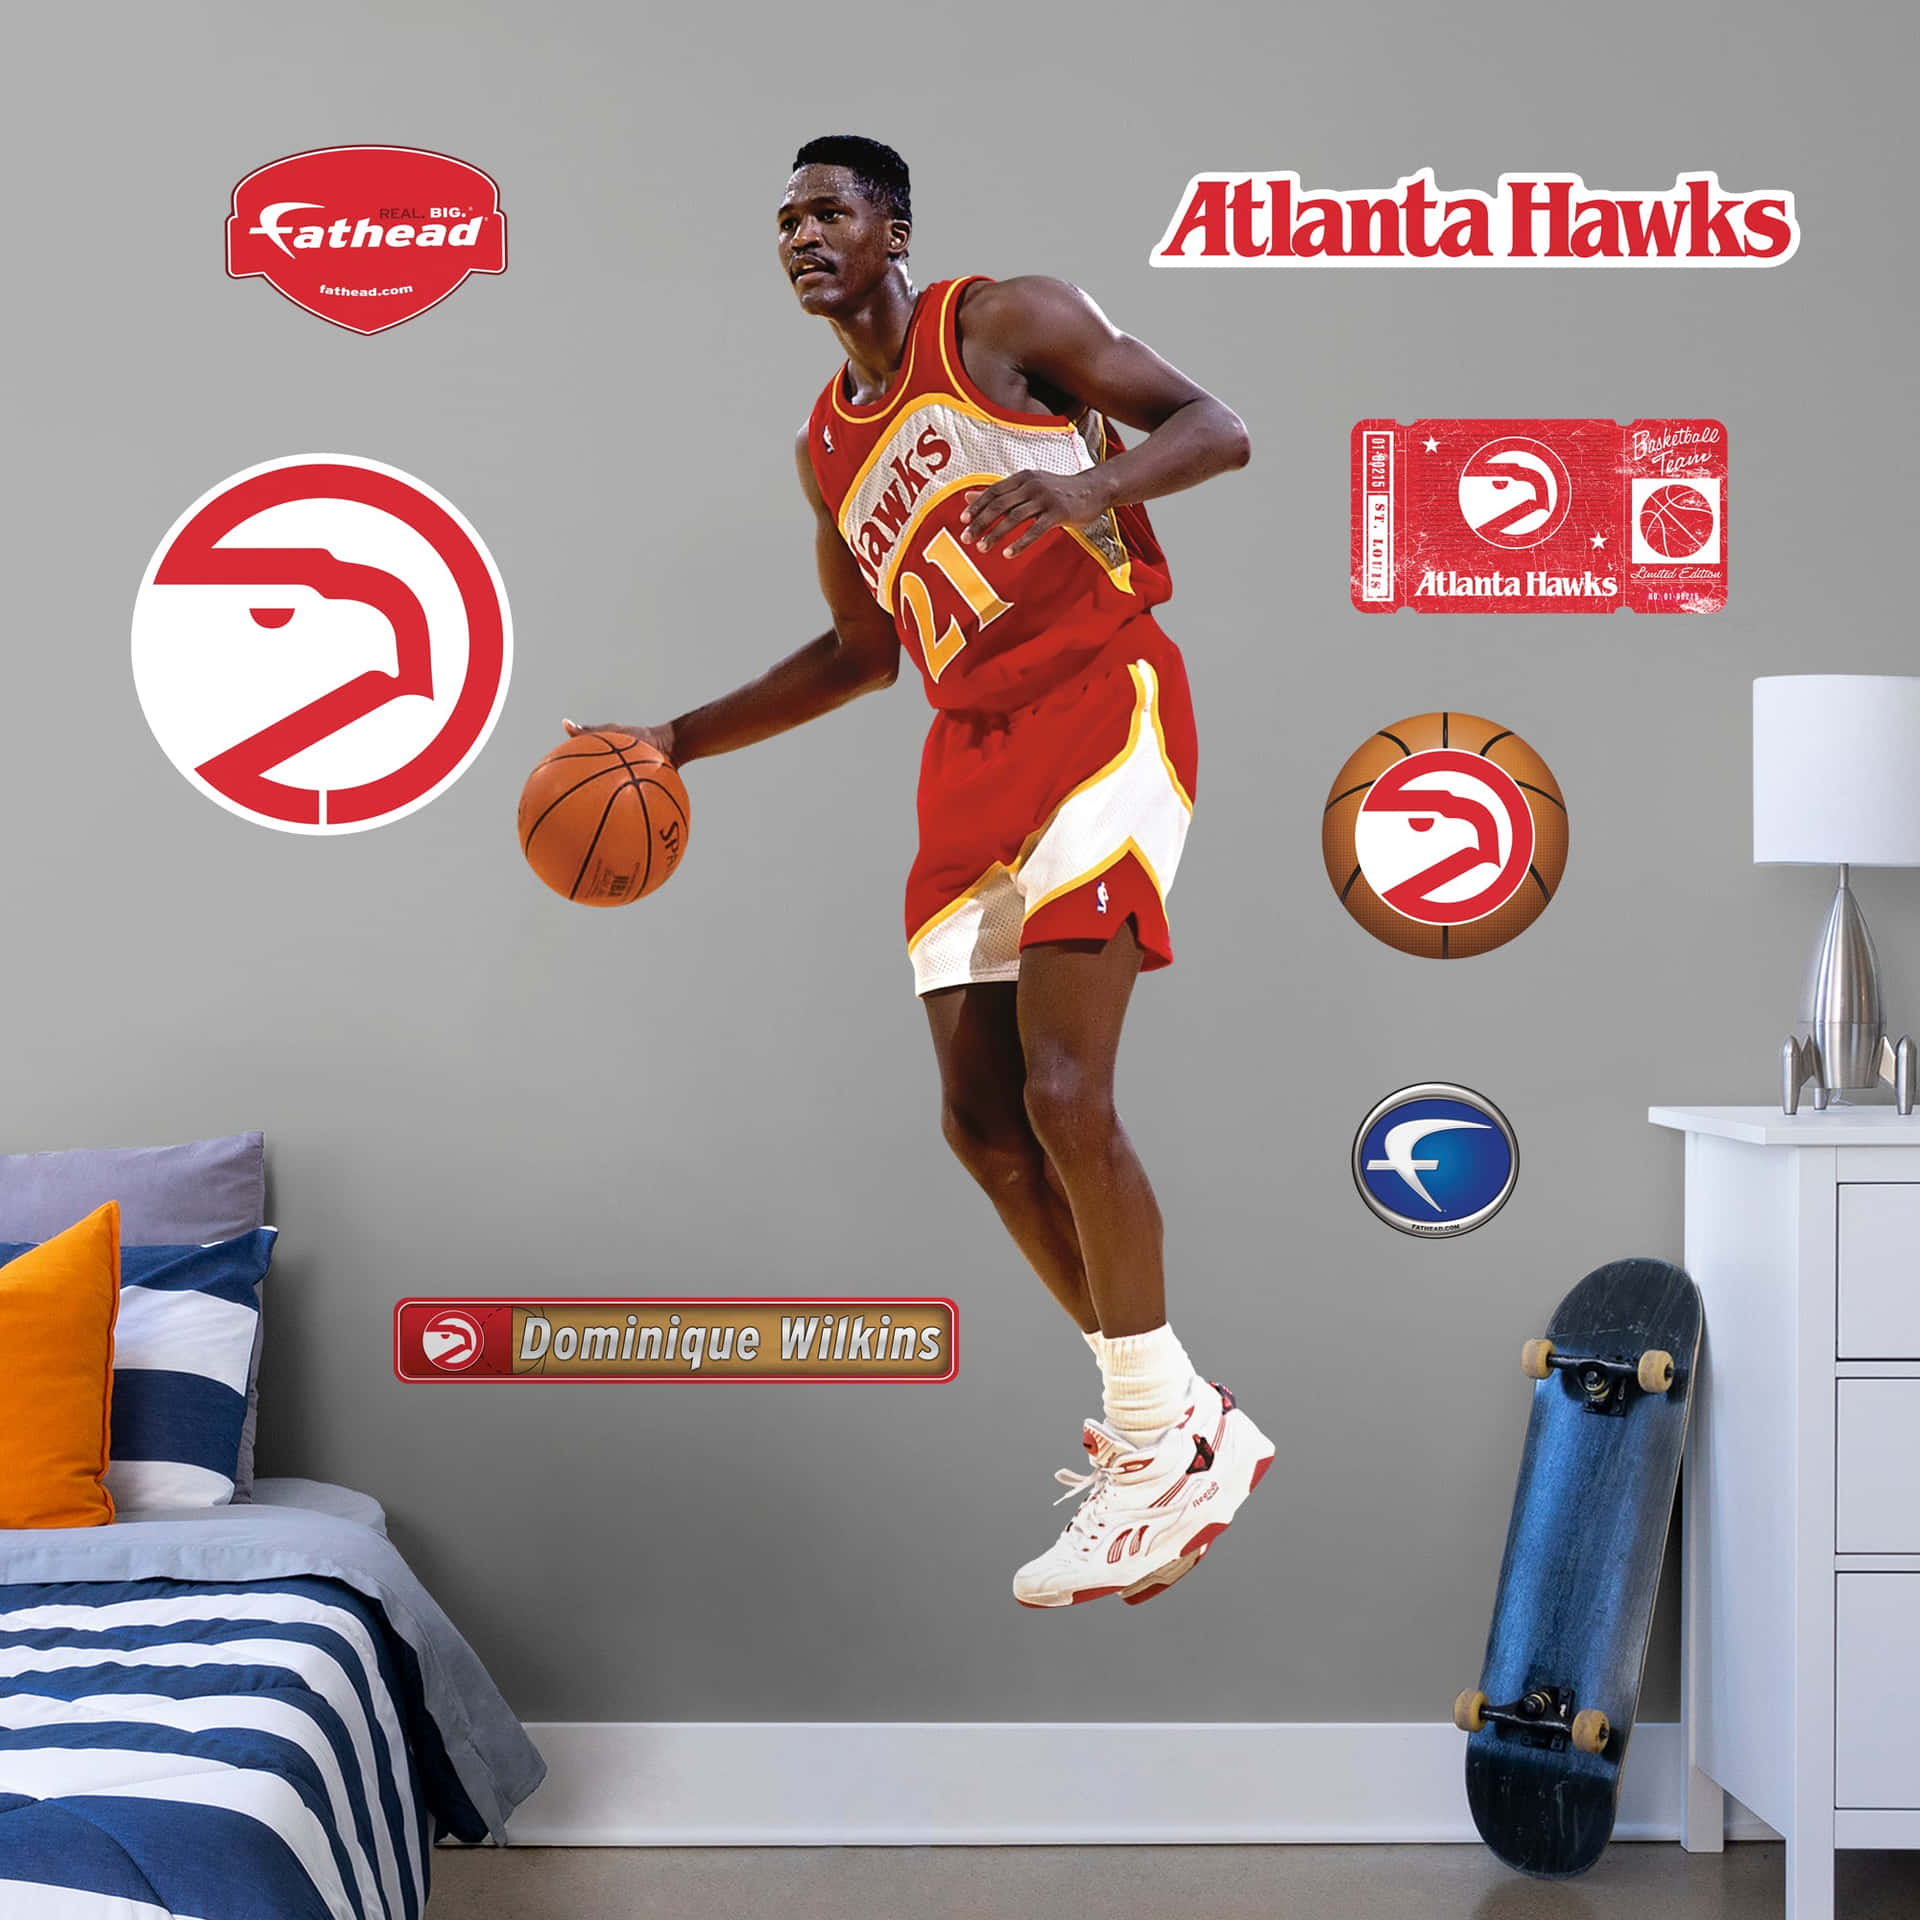 Dominique Wilkins Atlanta Hawks Wallpaper Decal Wallpaper